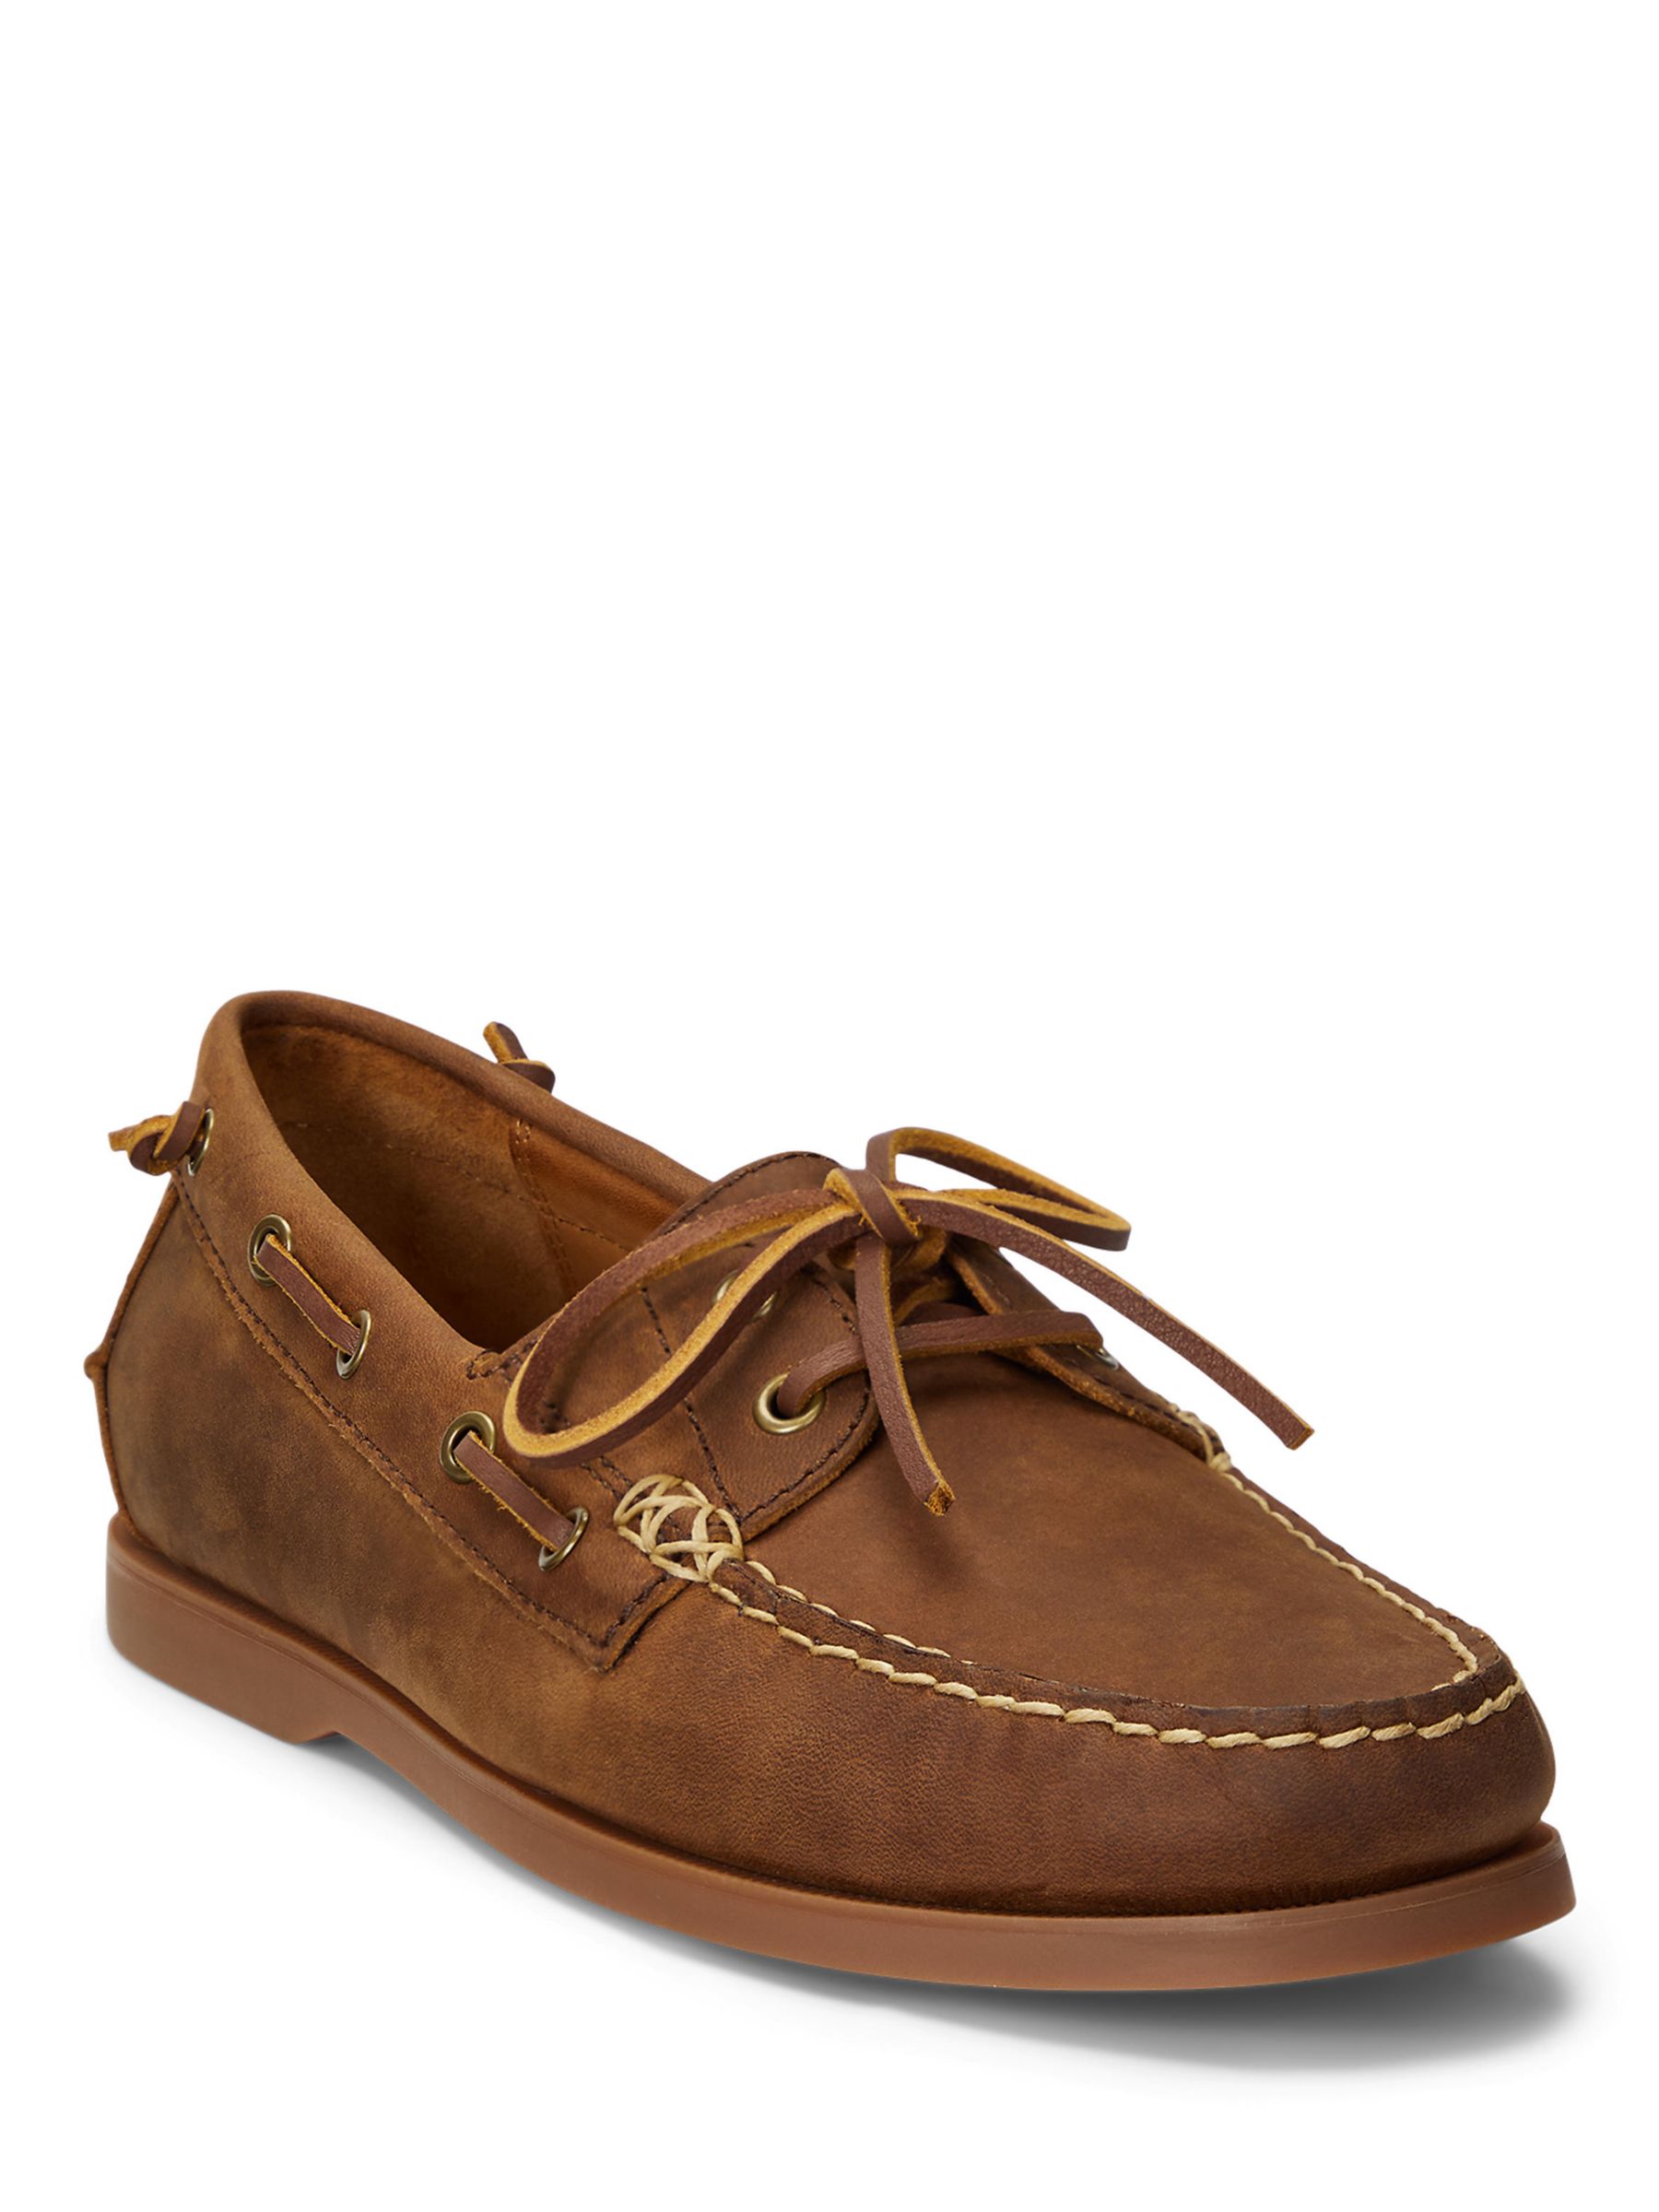 Ralph Lauren Merton Deep Saddle Boat Shoes, Tan, 7